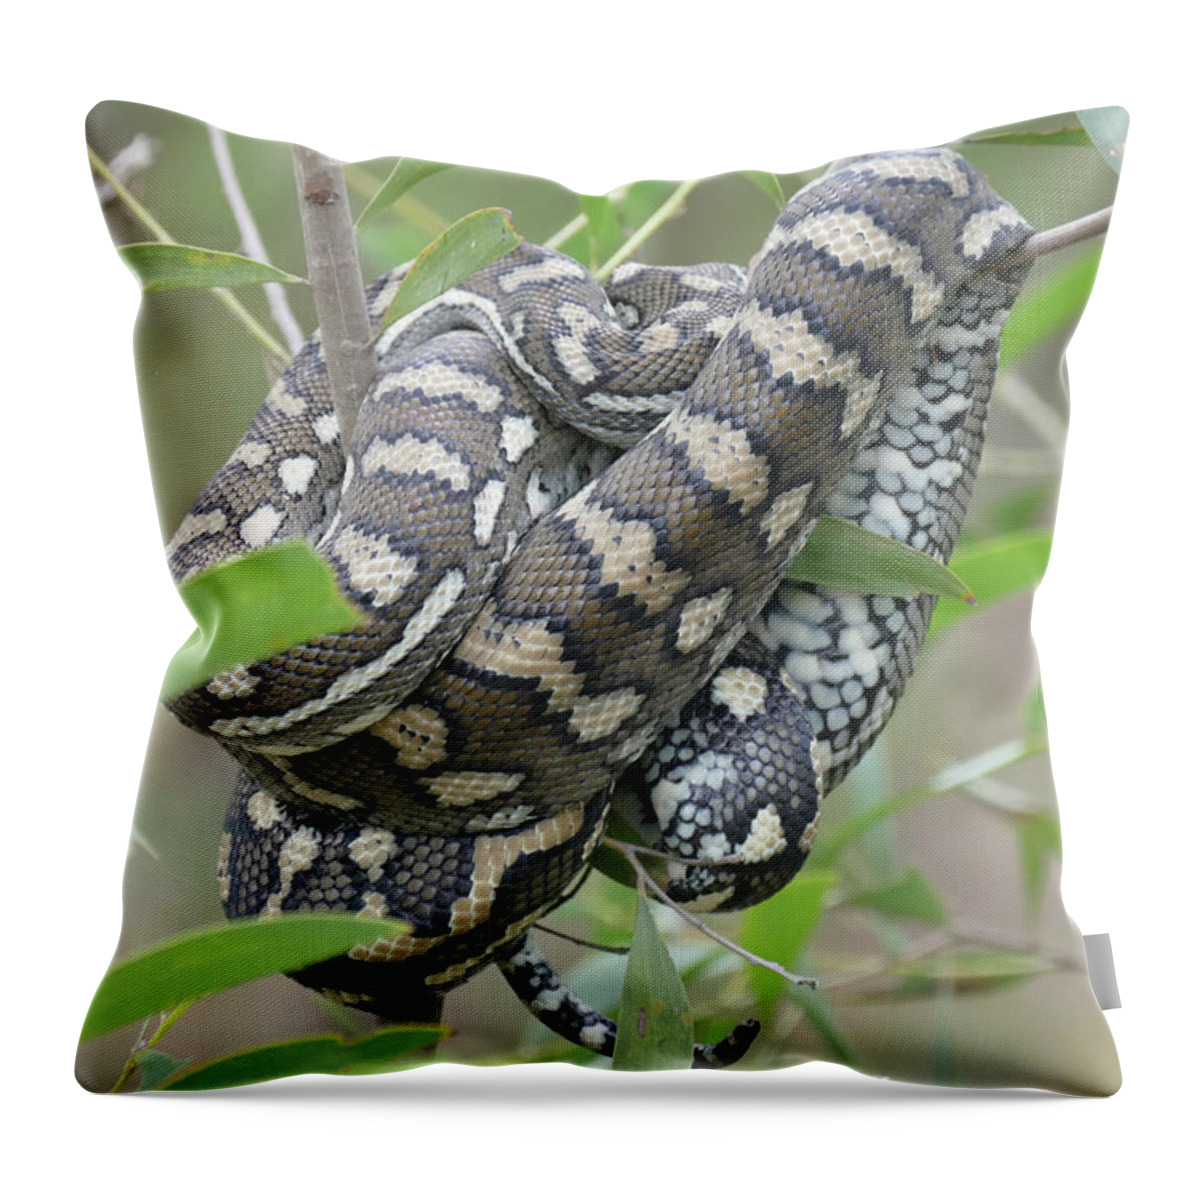 Carpet Python Throw Pillow featuring the photograph Nap Or Ambush by Maryse Jansen